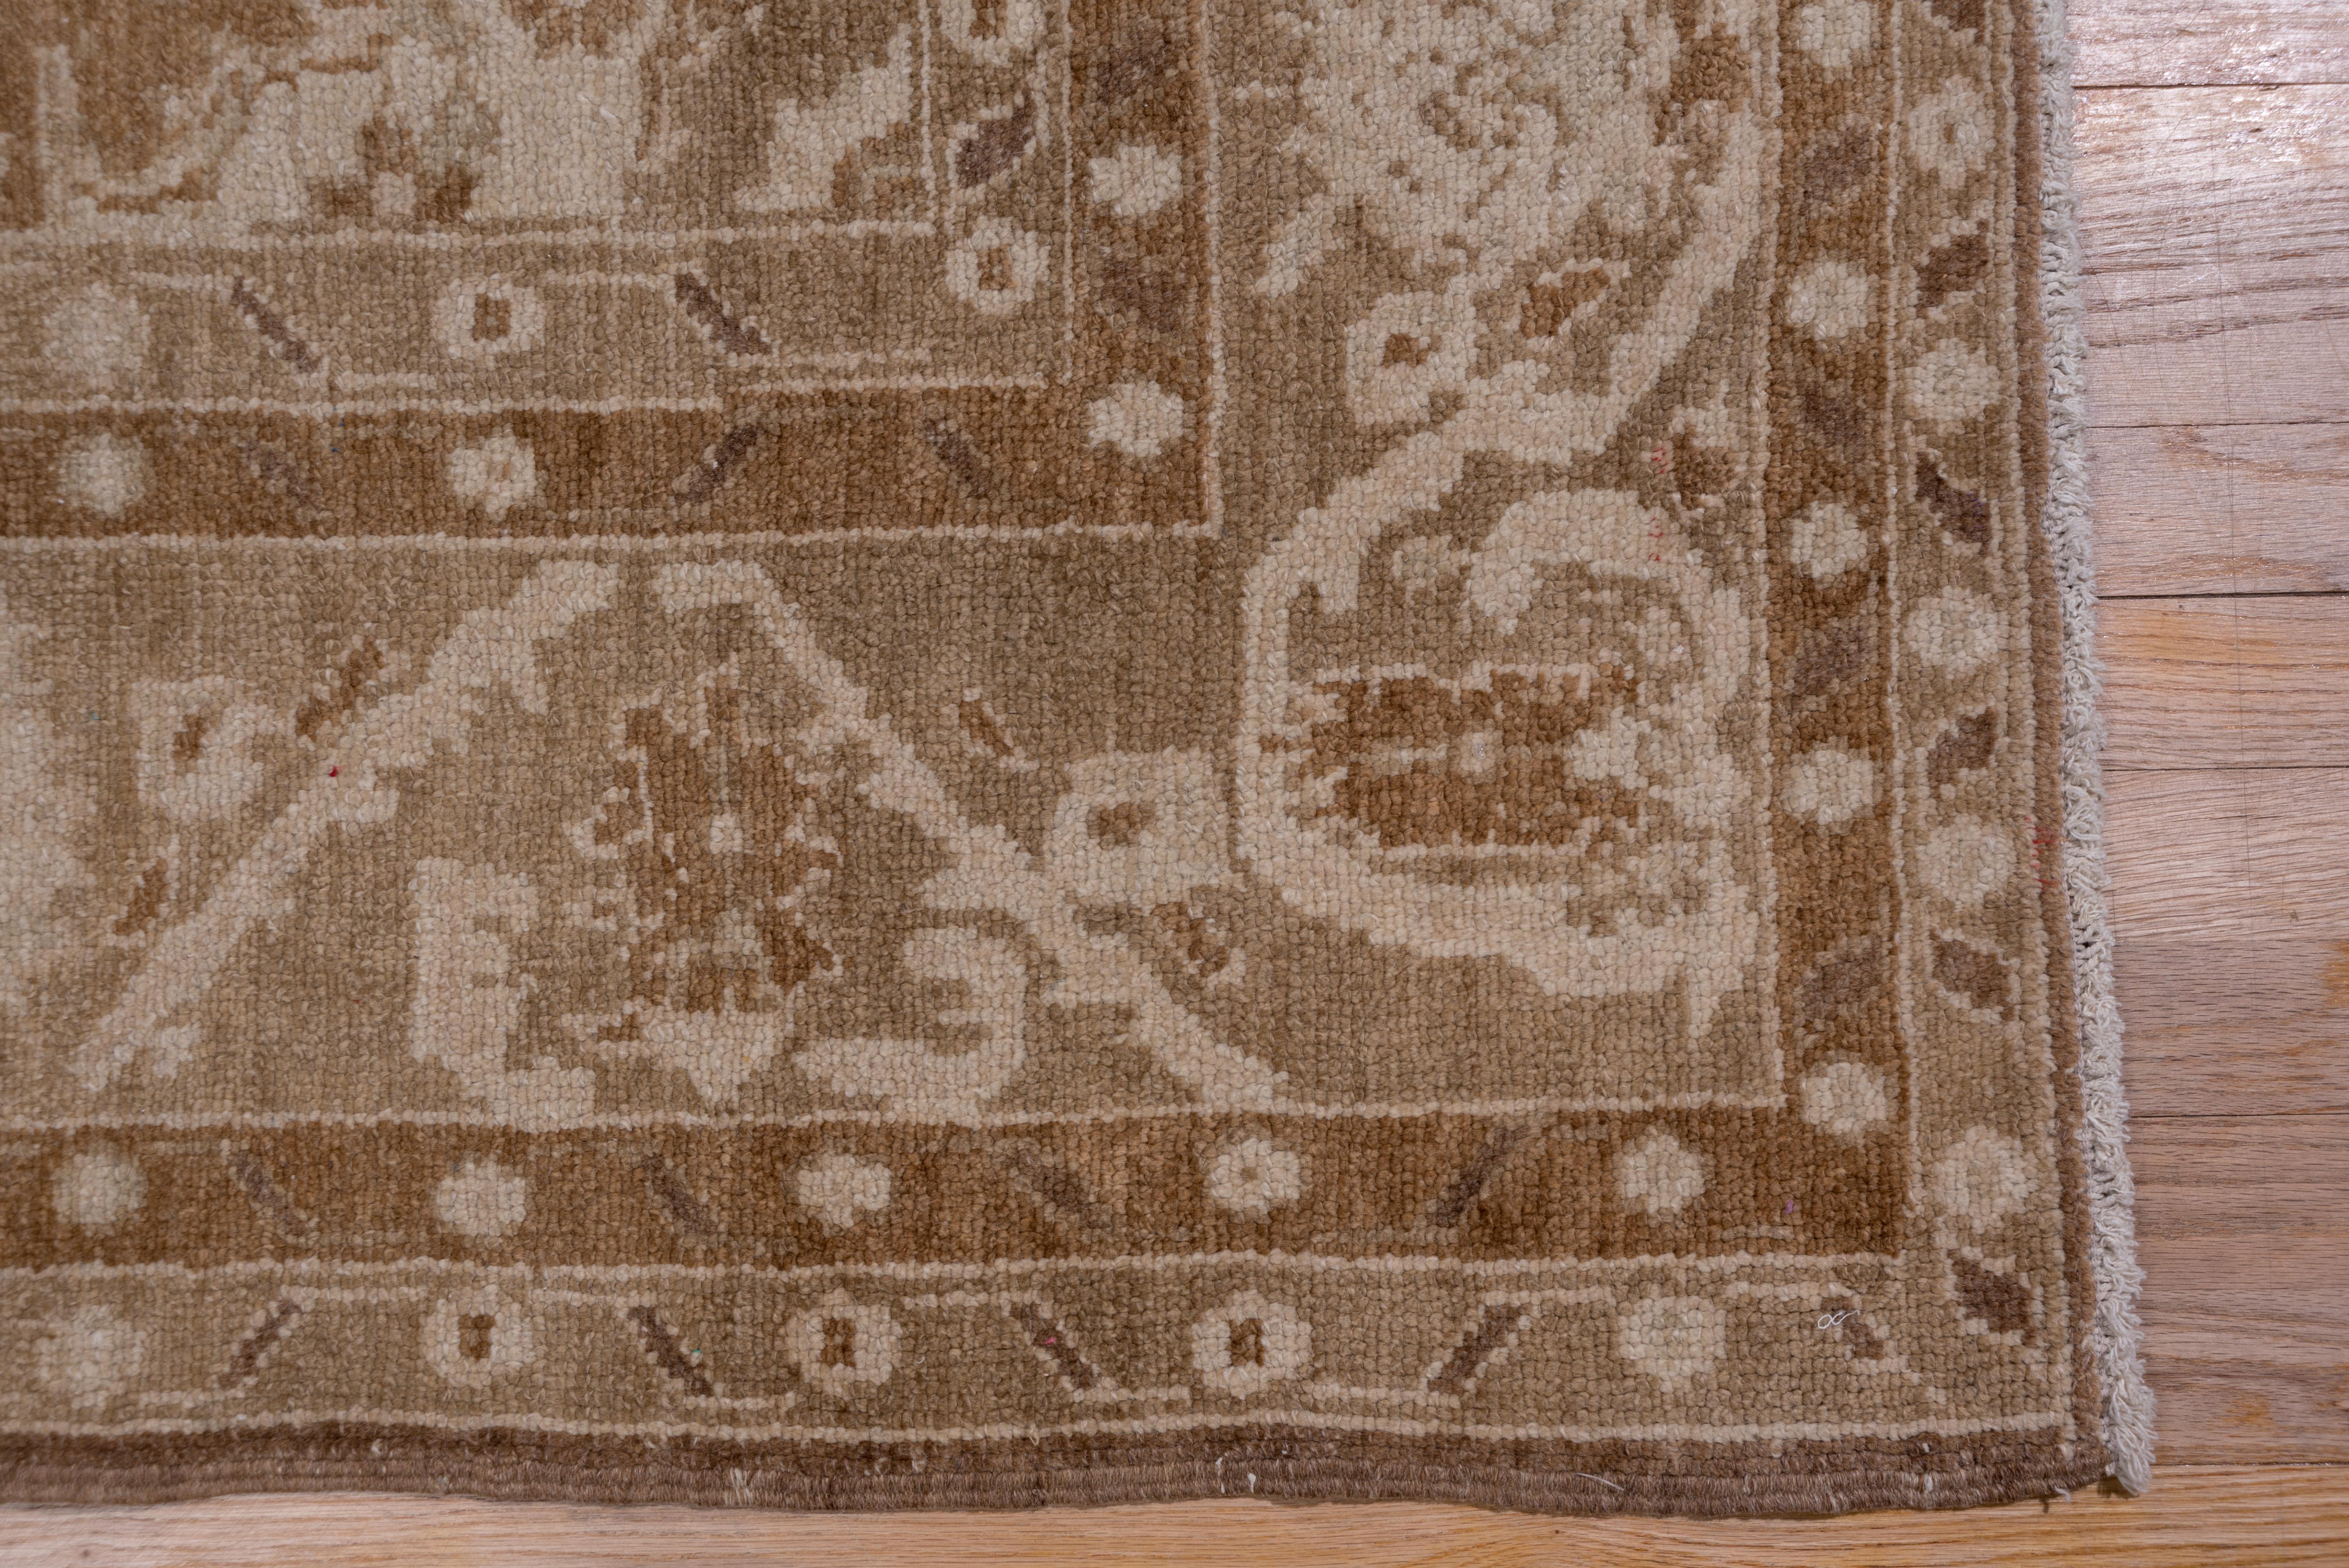 Antique Turkish Oushak Carpet, Brown Field, Light Brown Borders, Circa 1930s For Sale 2